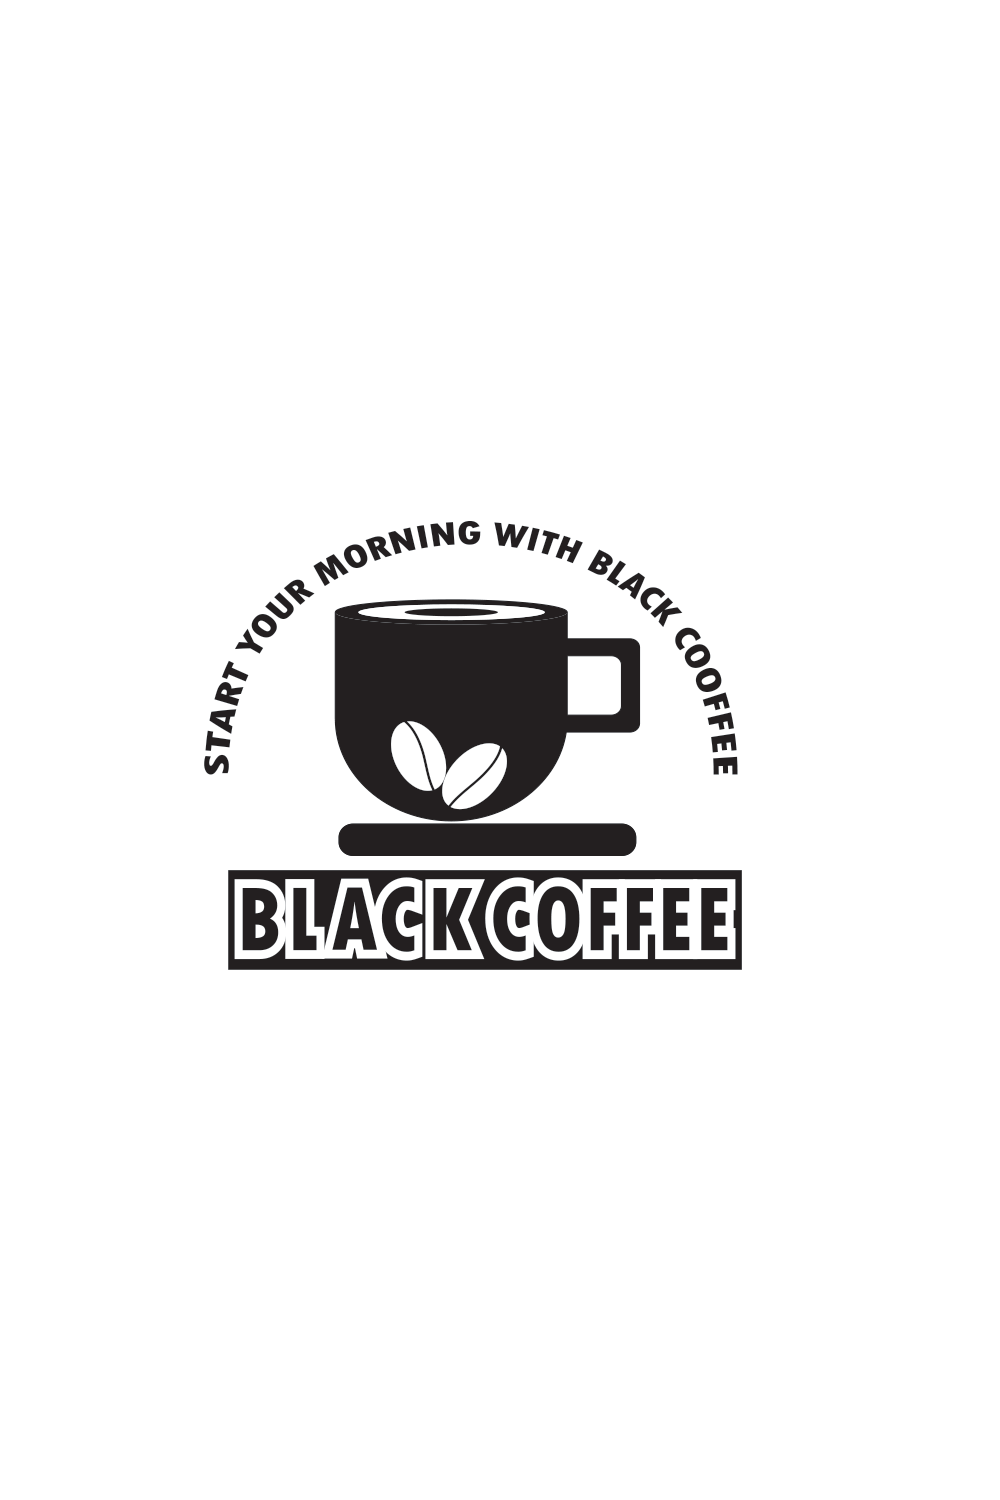 Black Coffee Logo Template.